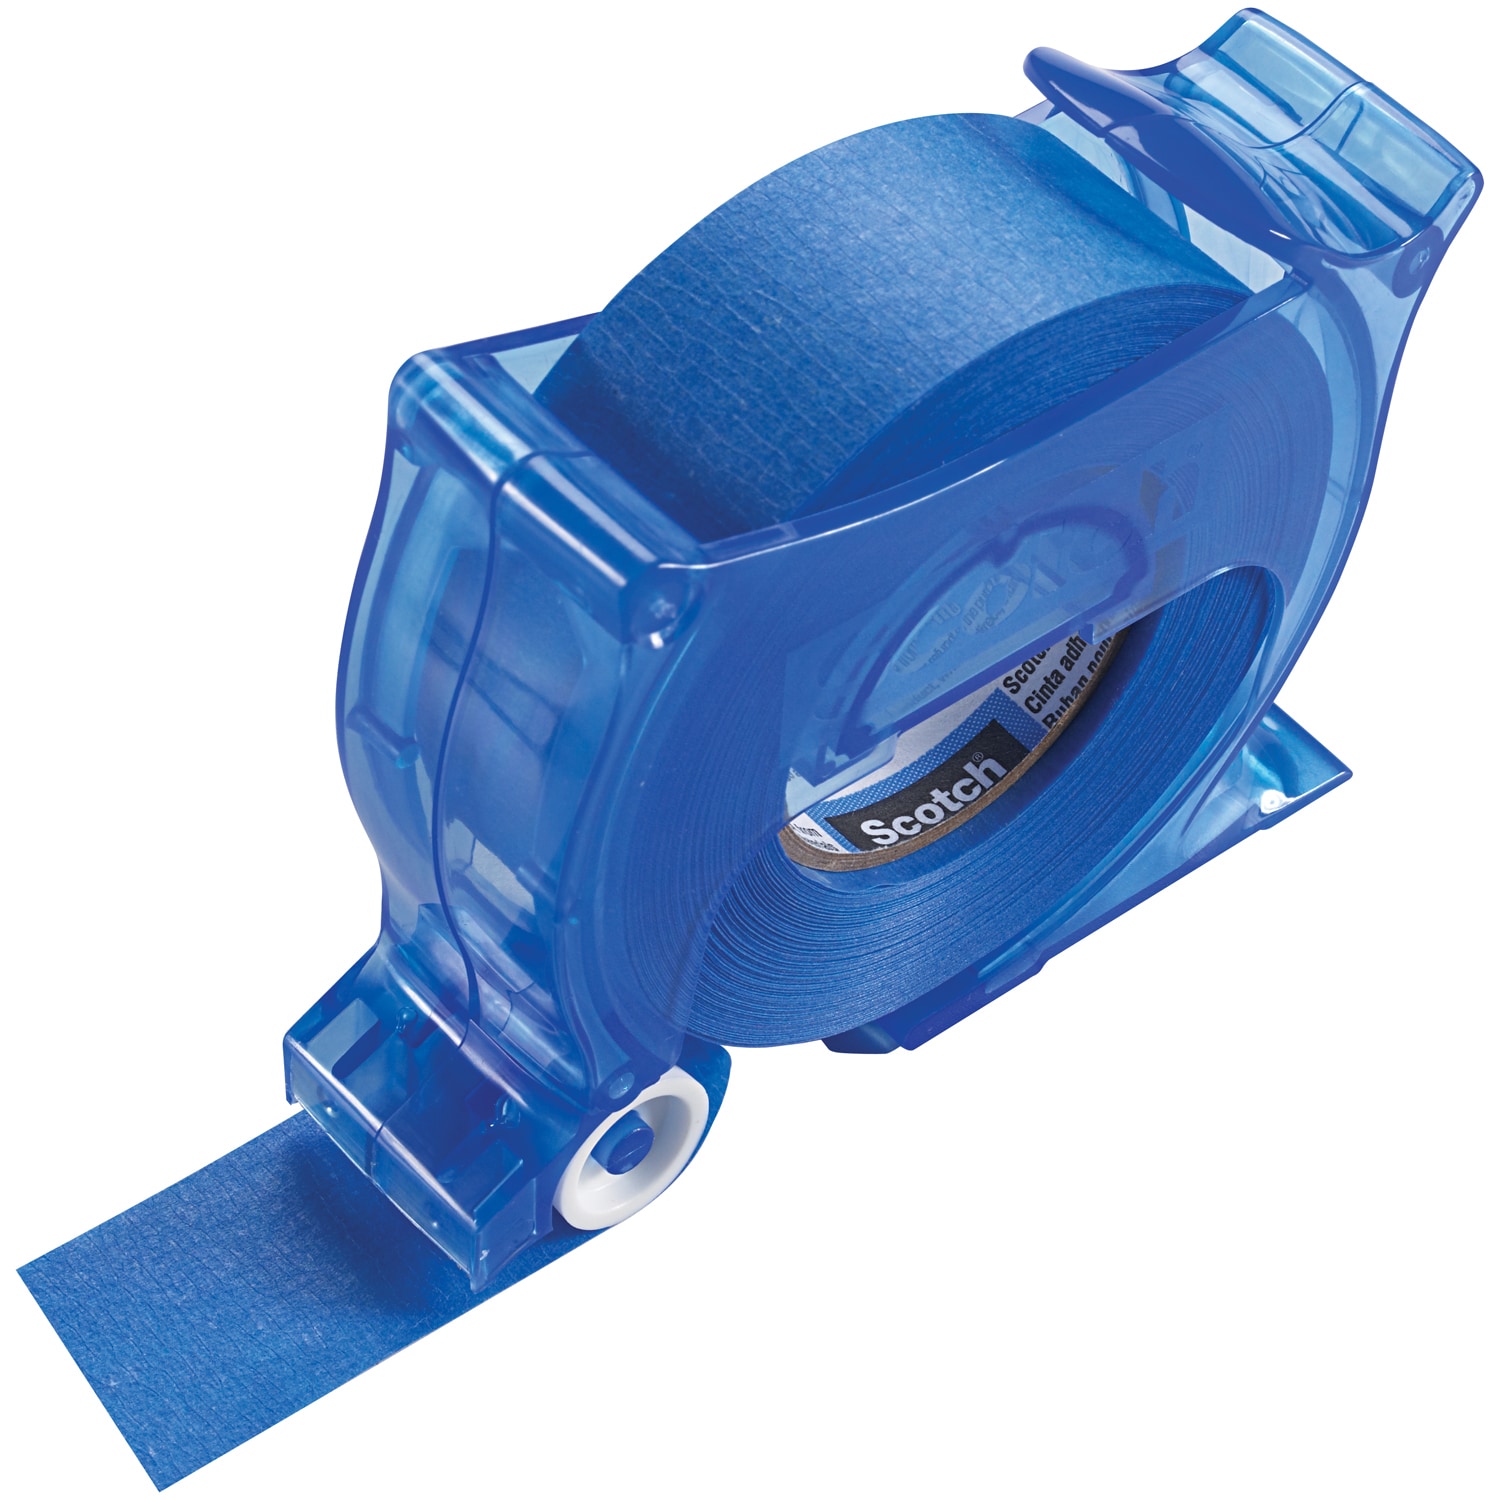 ScotchBlue Tape Applicator Refills, Blue, Includes 1 Refill